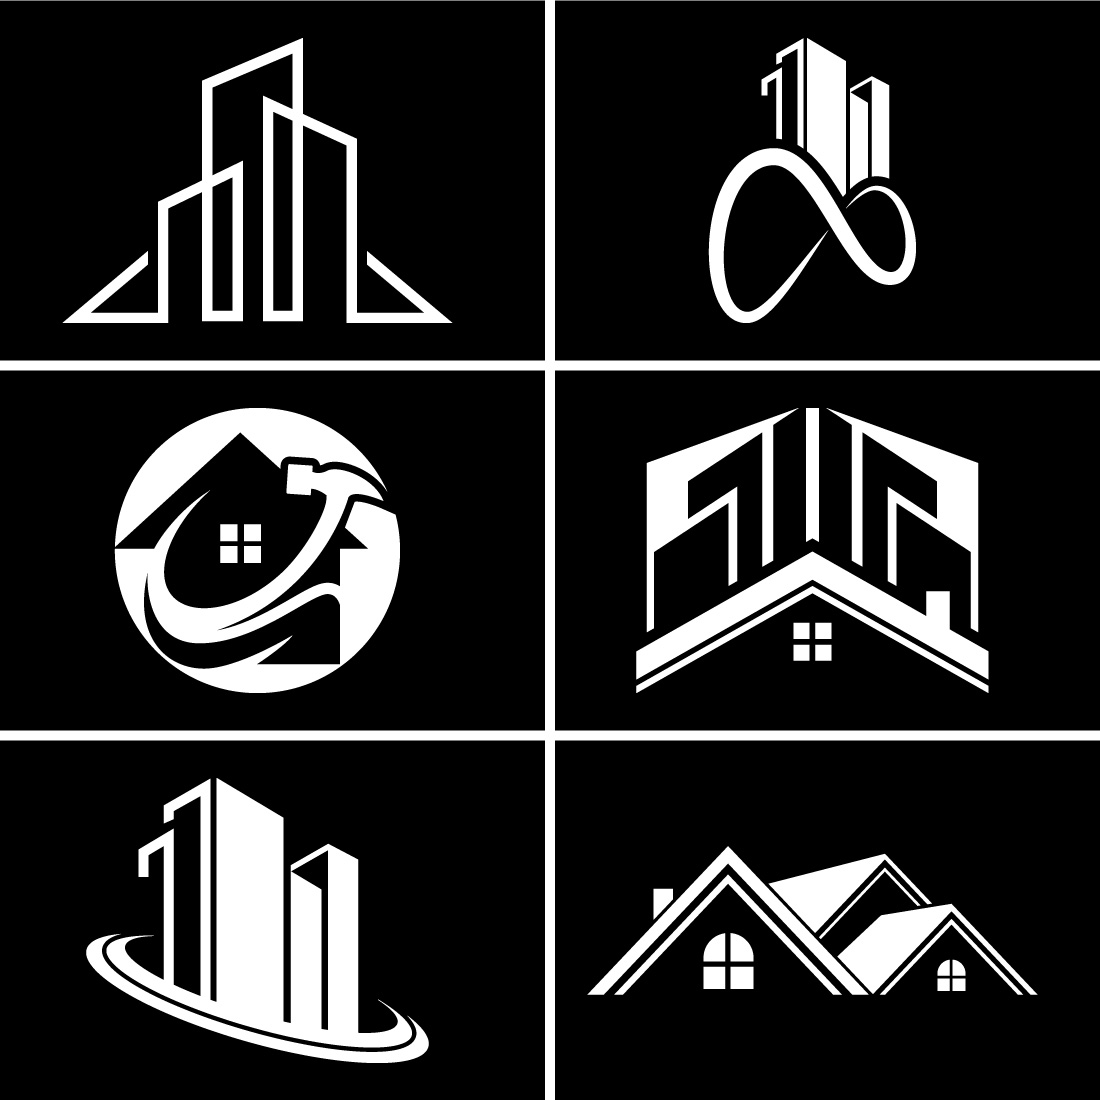 Real estate logo, House logo, Home logo sign symbol cover image.